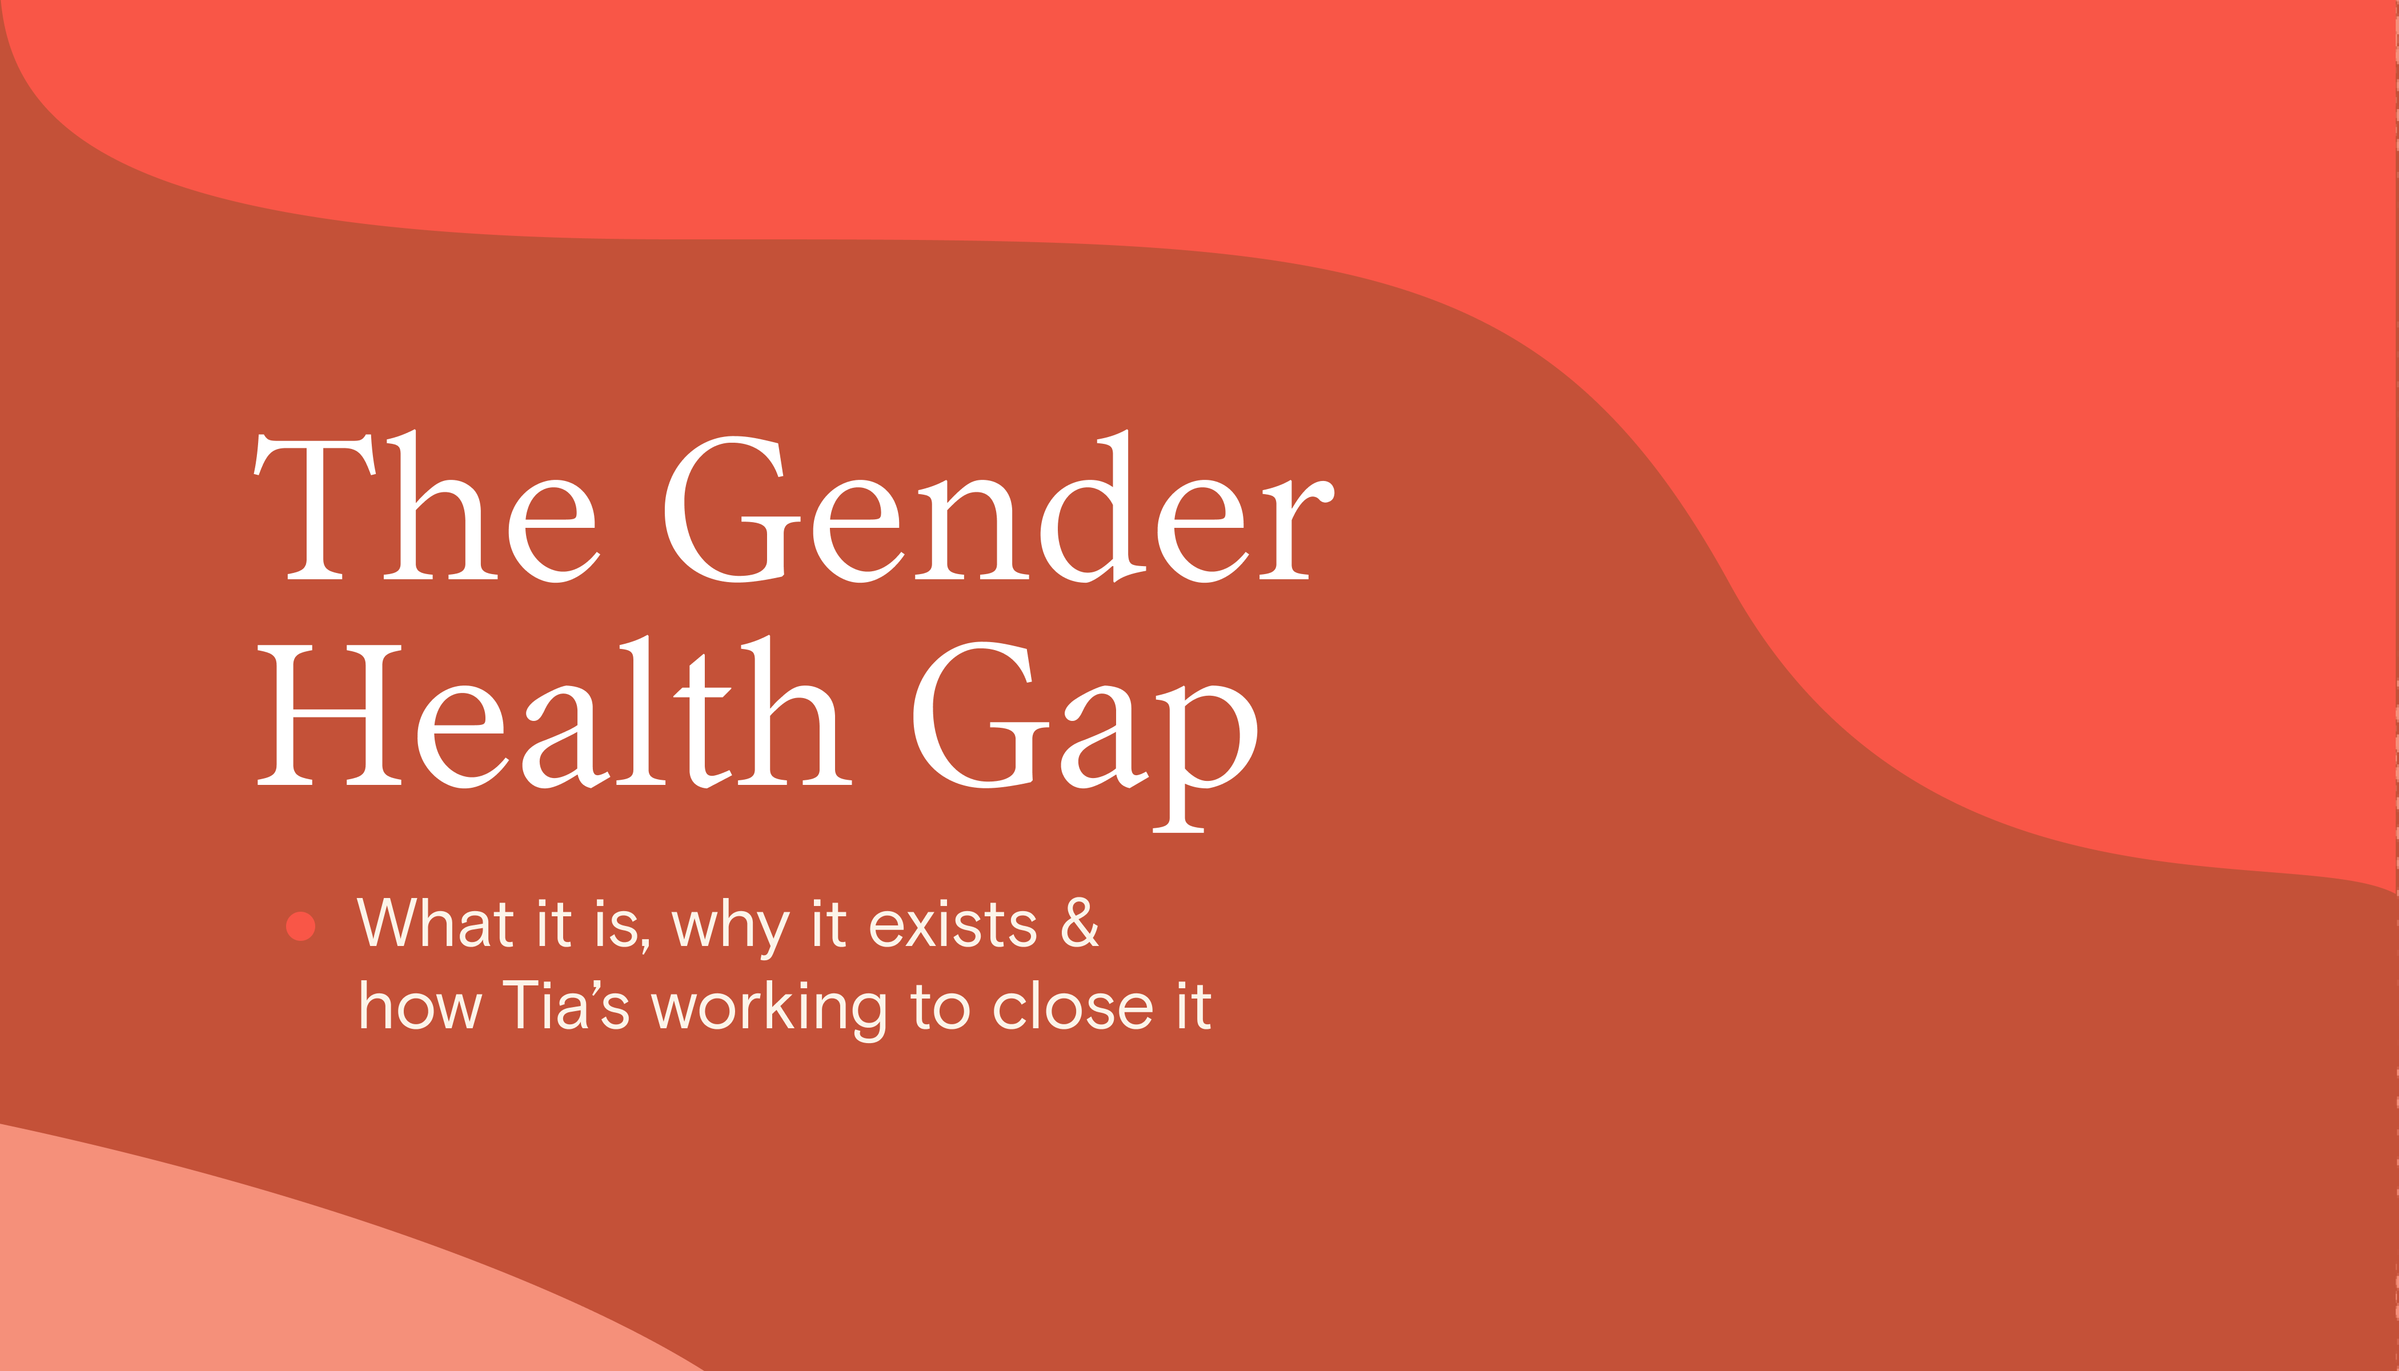 The Gender Health Gap